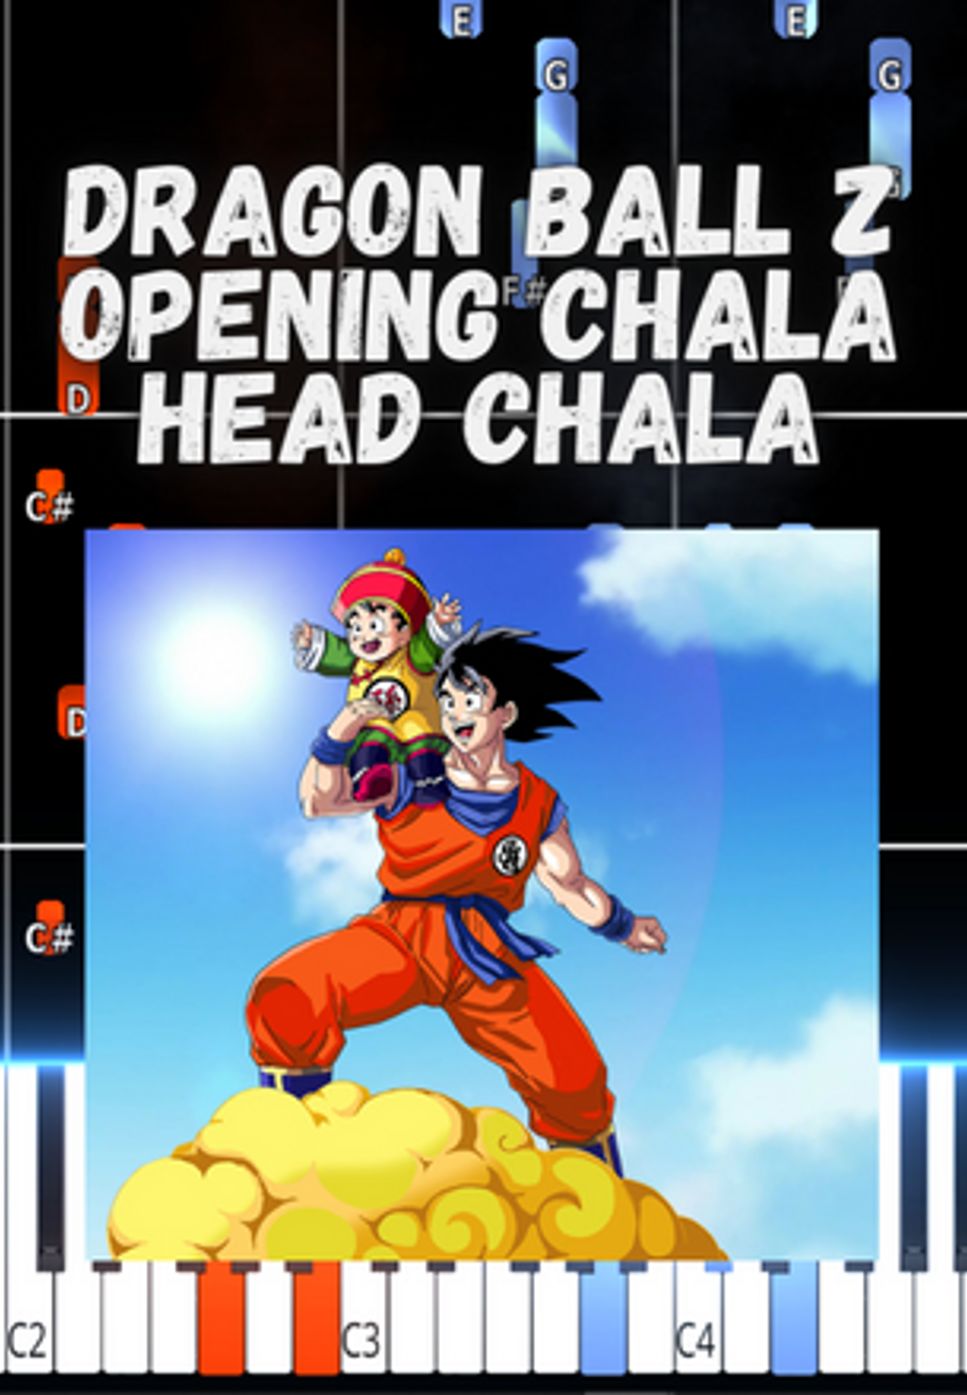 Chiho Kiyooka - Chala Head Chala by Marco D.